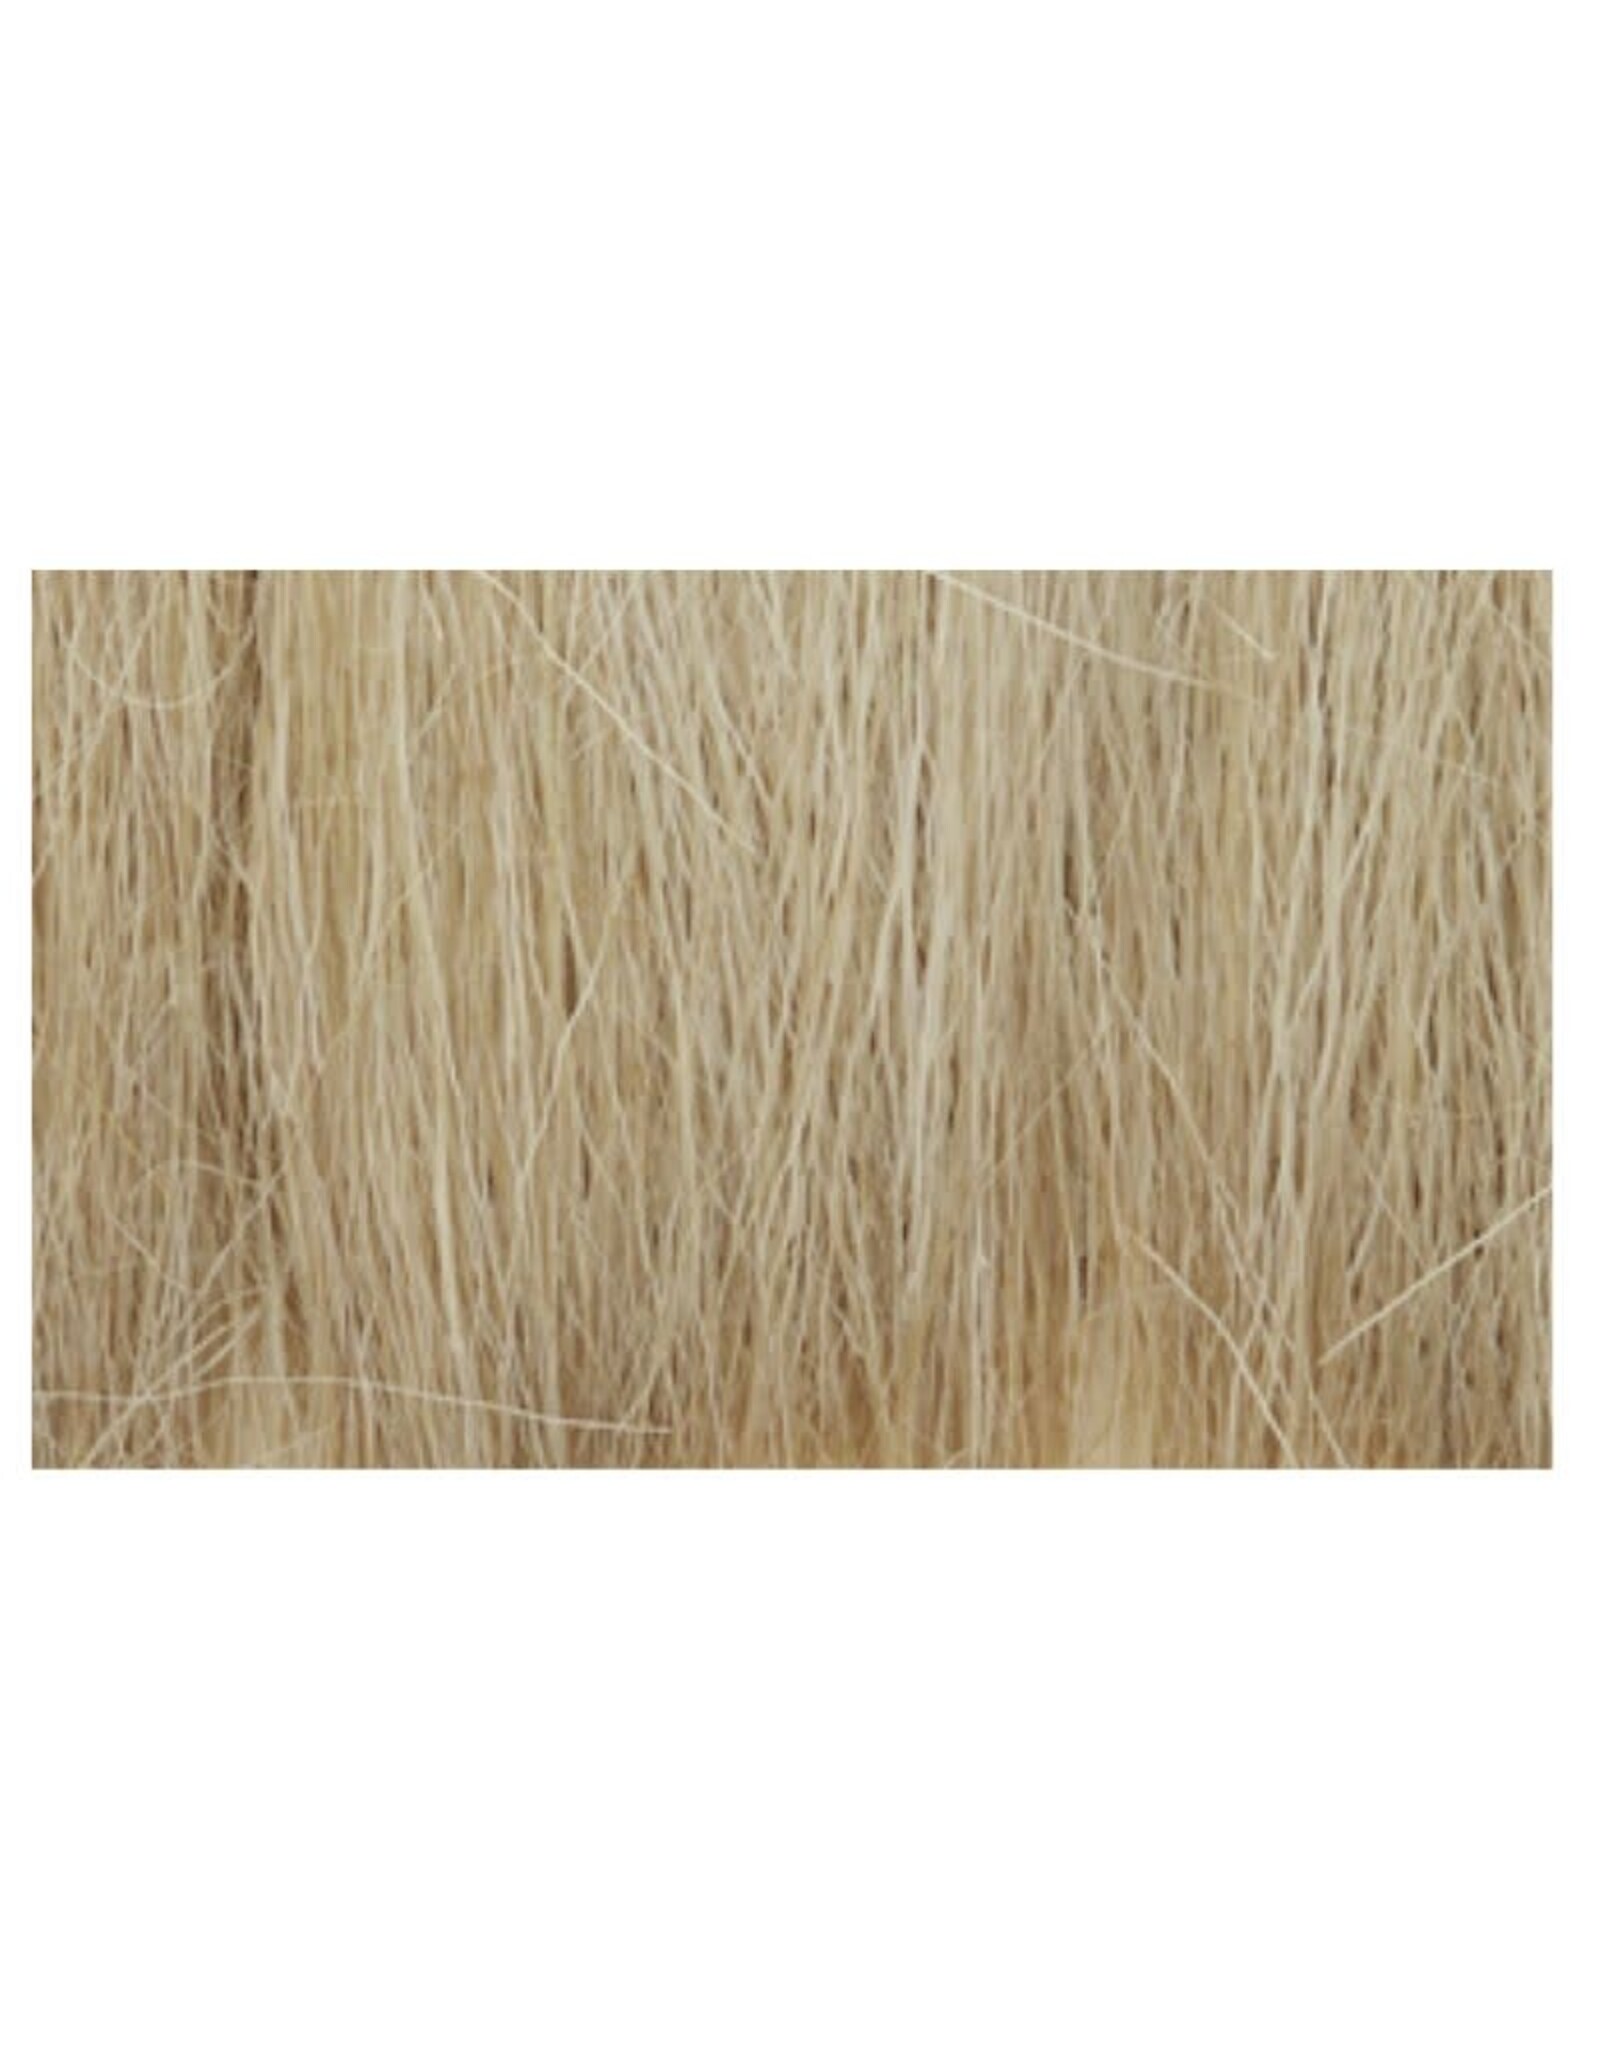 (S/O) Field Grass: Natural Straw